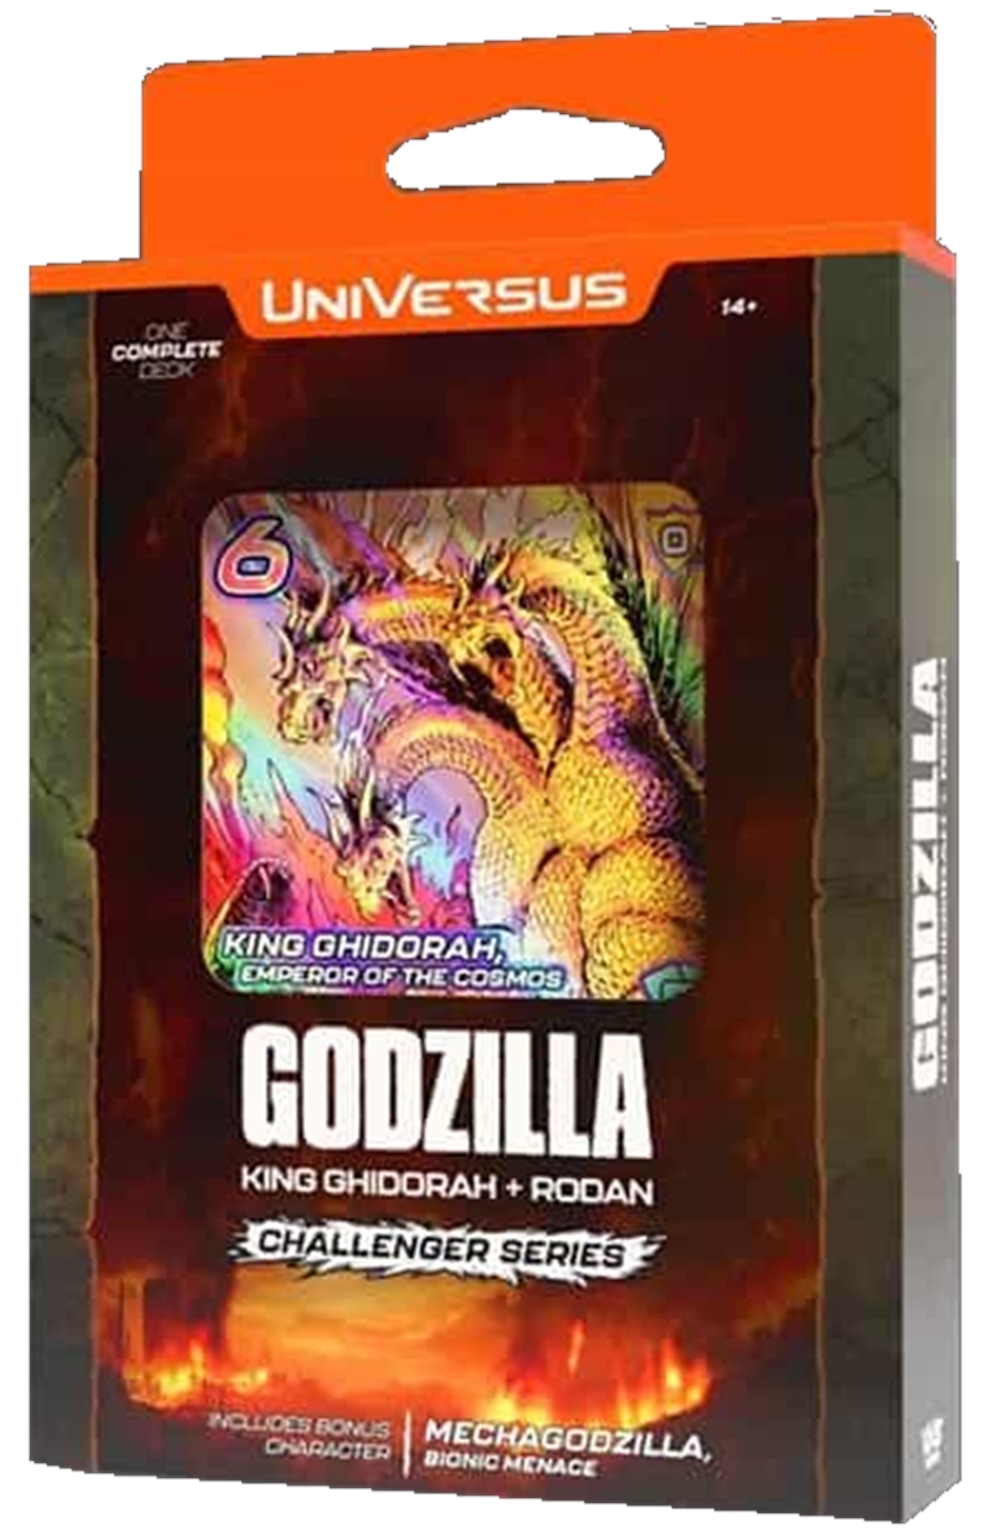 Universus Tcg: Godzilla Challenger Series - King Ghodorah + Rodan Deck